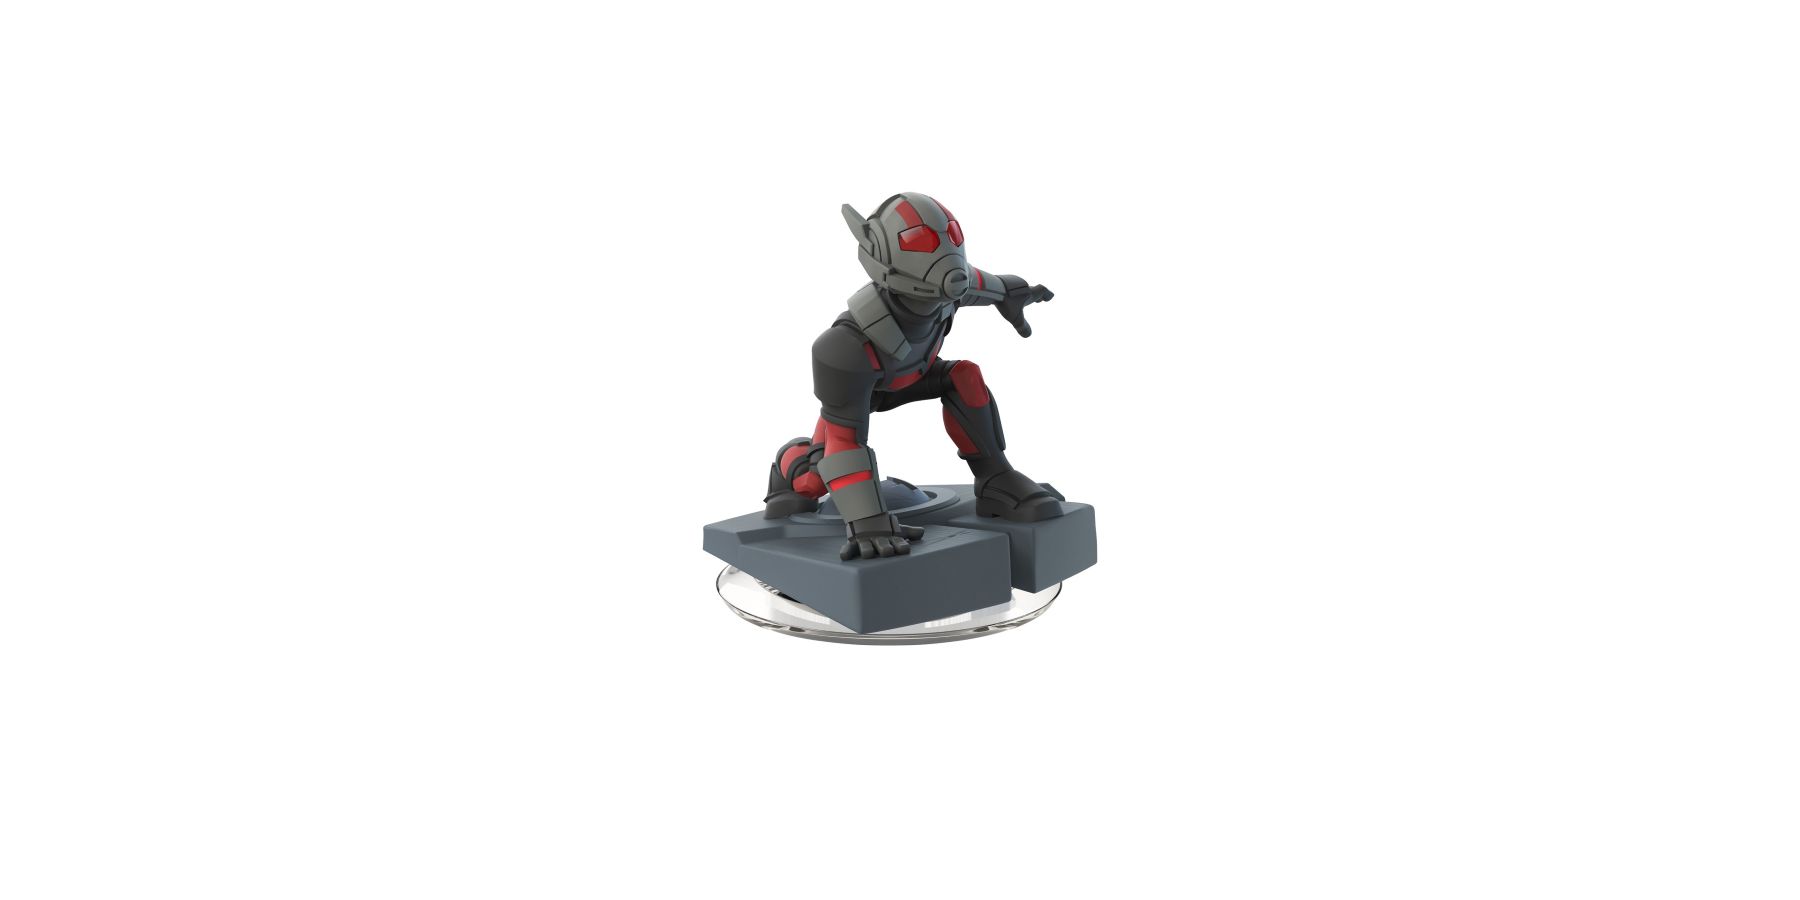 Ant-Man making a superhero landing pose as a figure for Disney Infinity